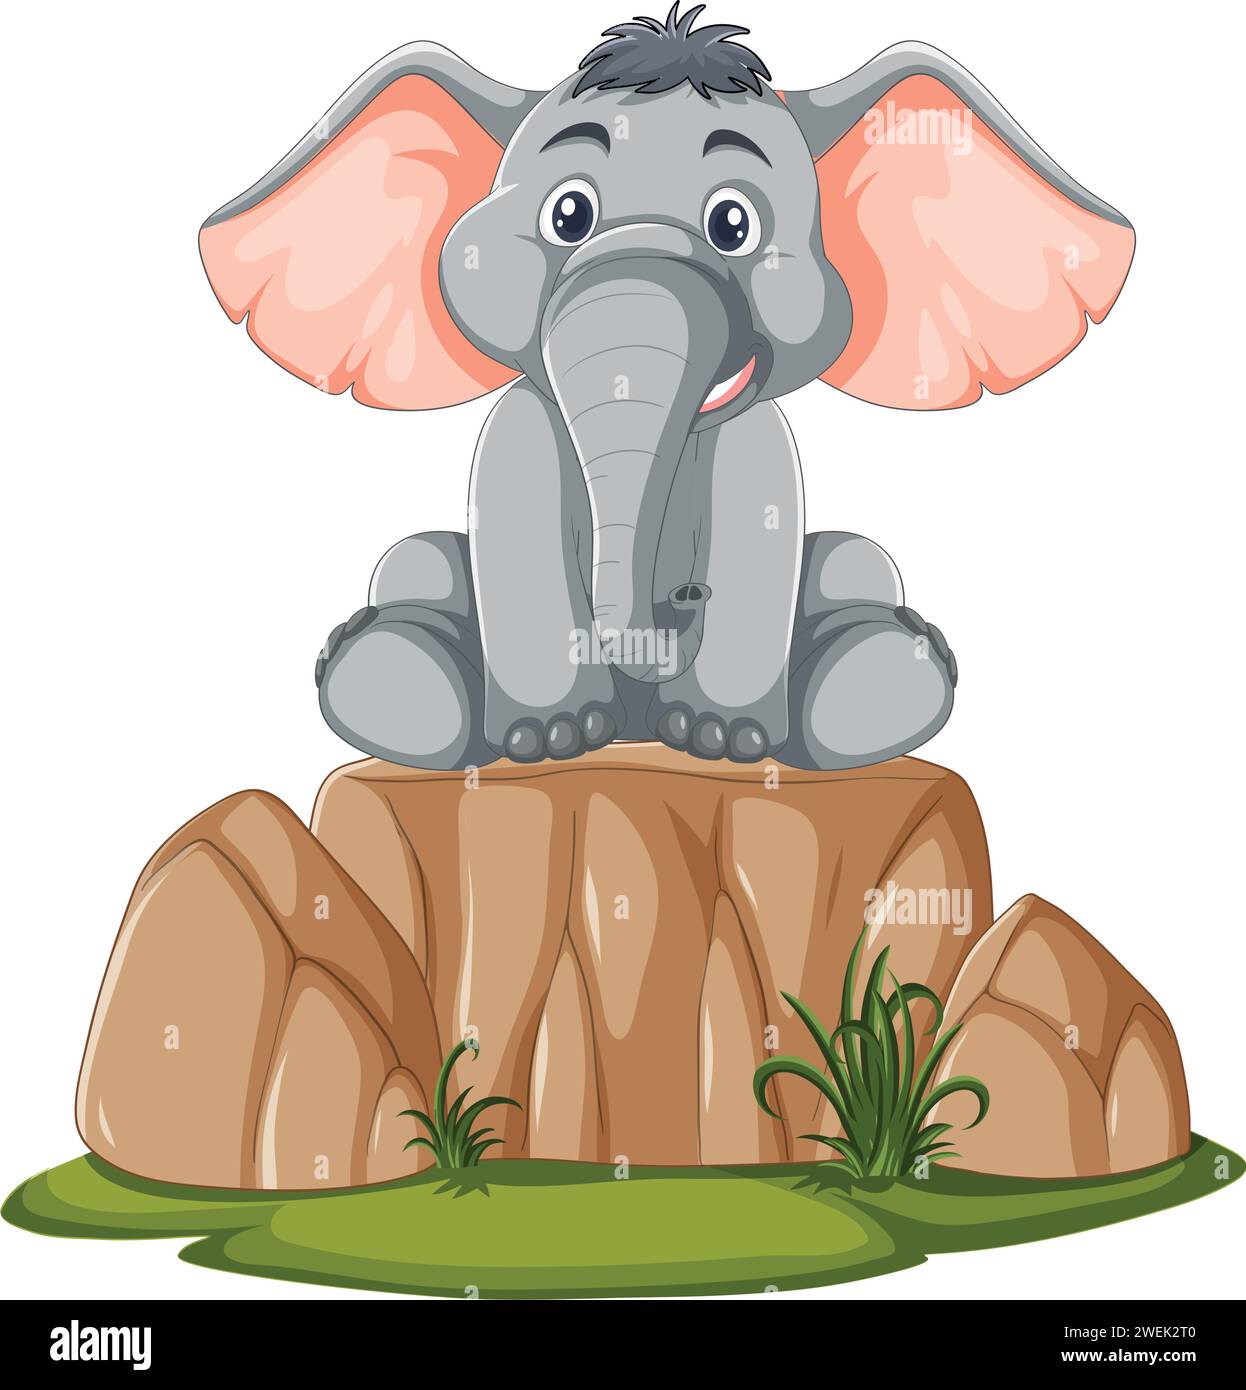 Cute elephant on a rocky outcrop illustration Stock Vector